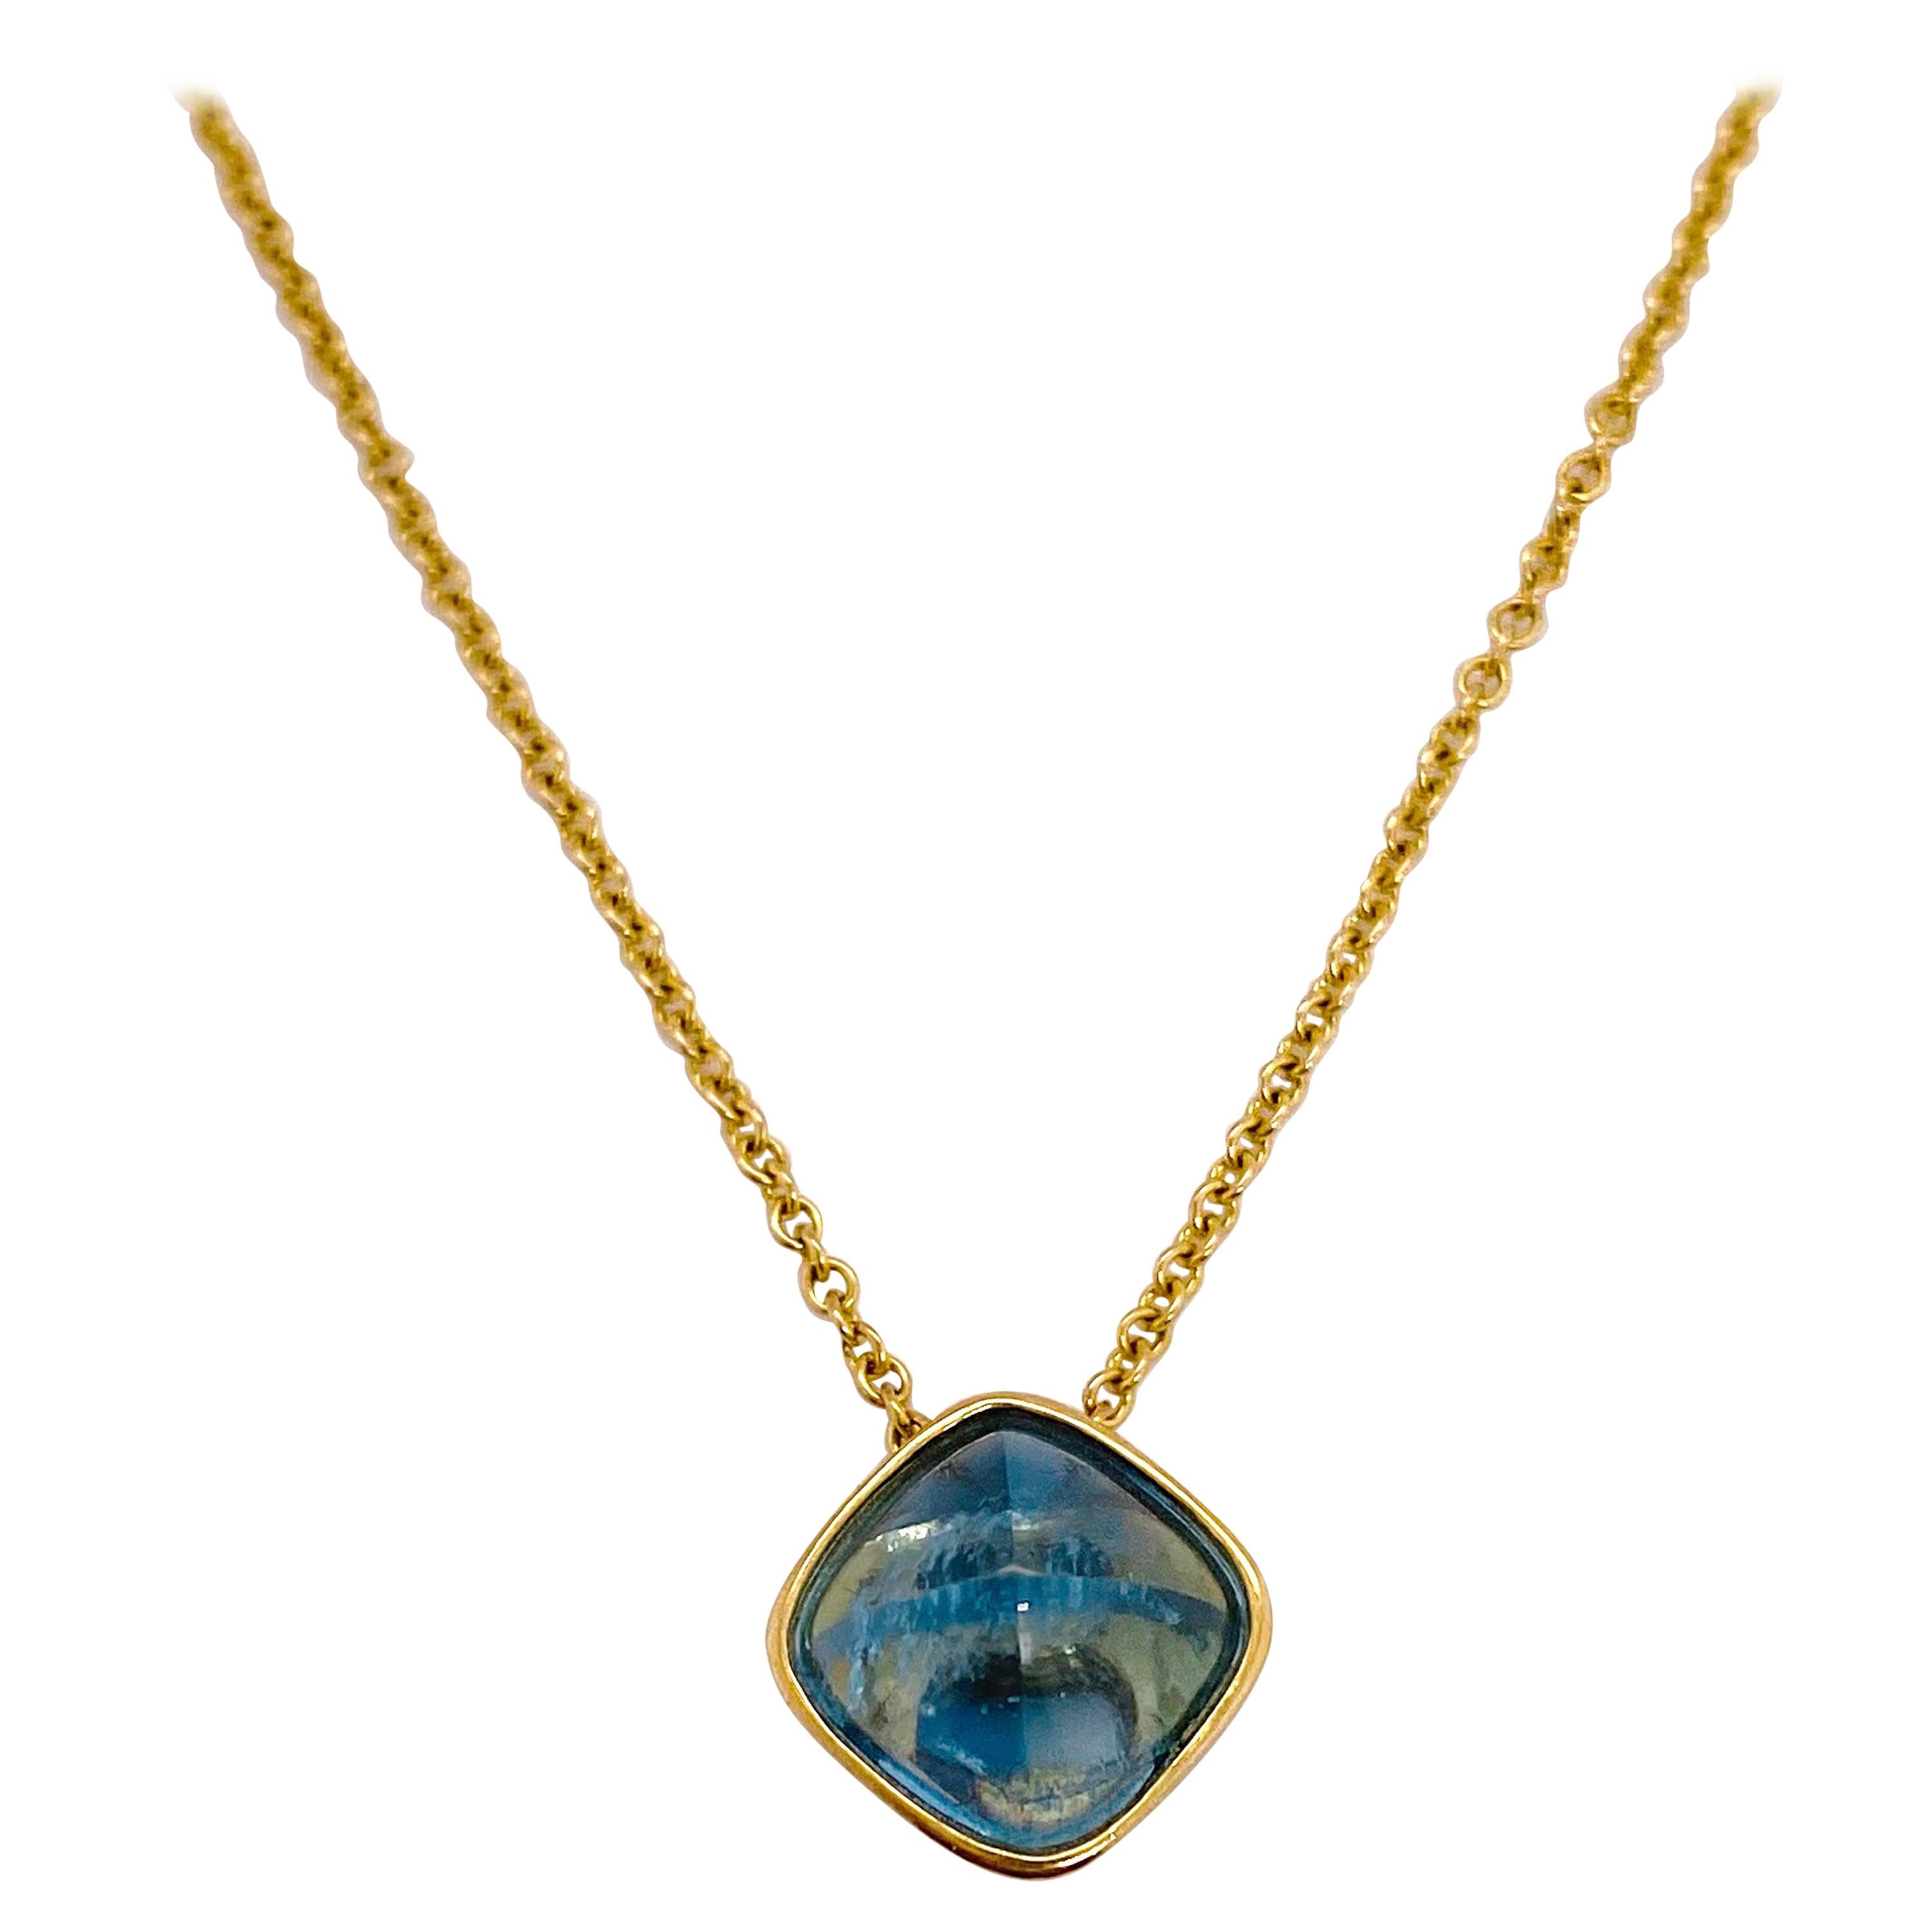 Aquamarine Pendant Necklace, Yellow Gold, Slide Pendant Blue Aqua